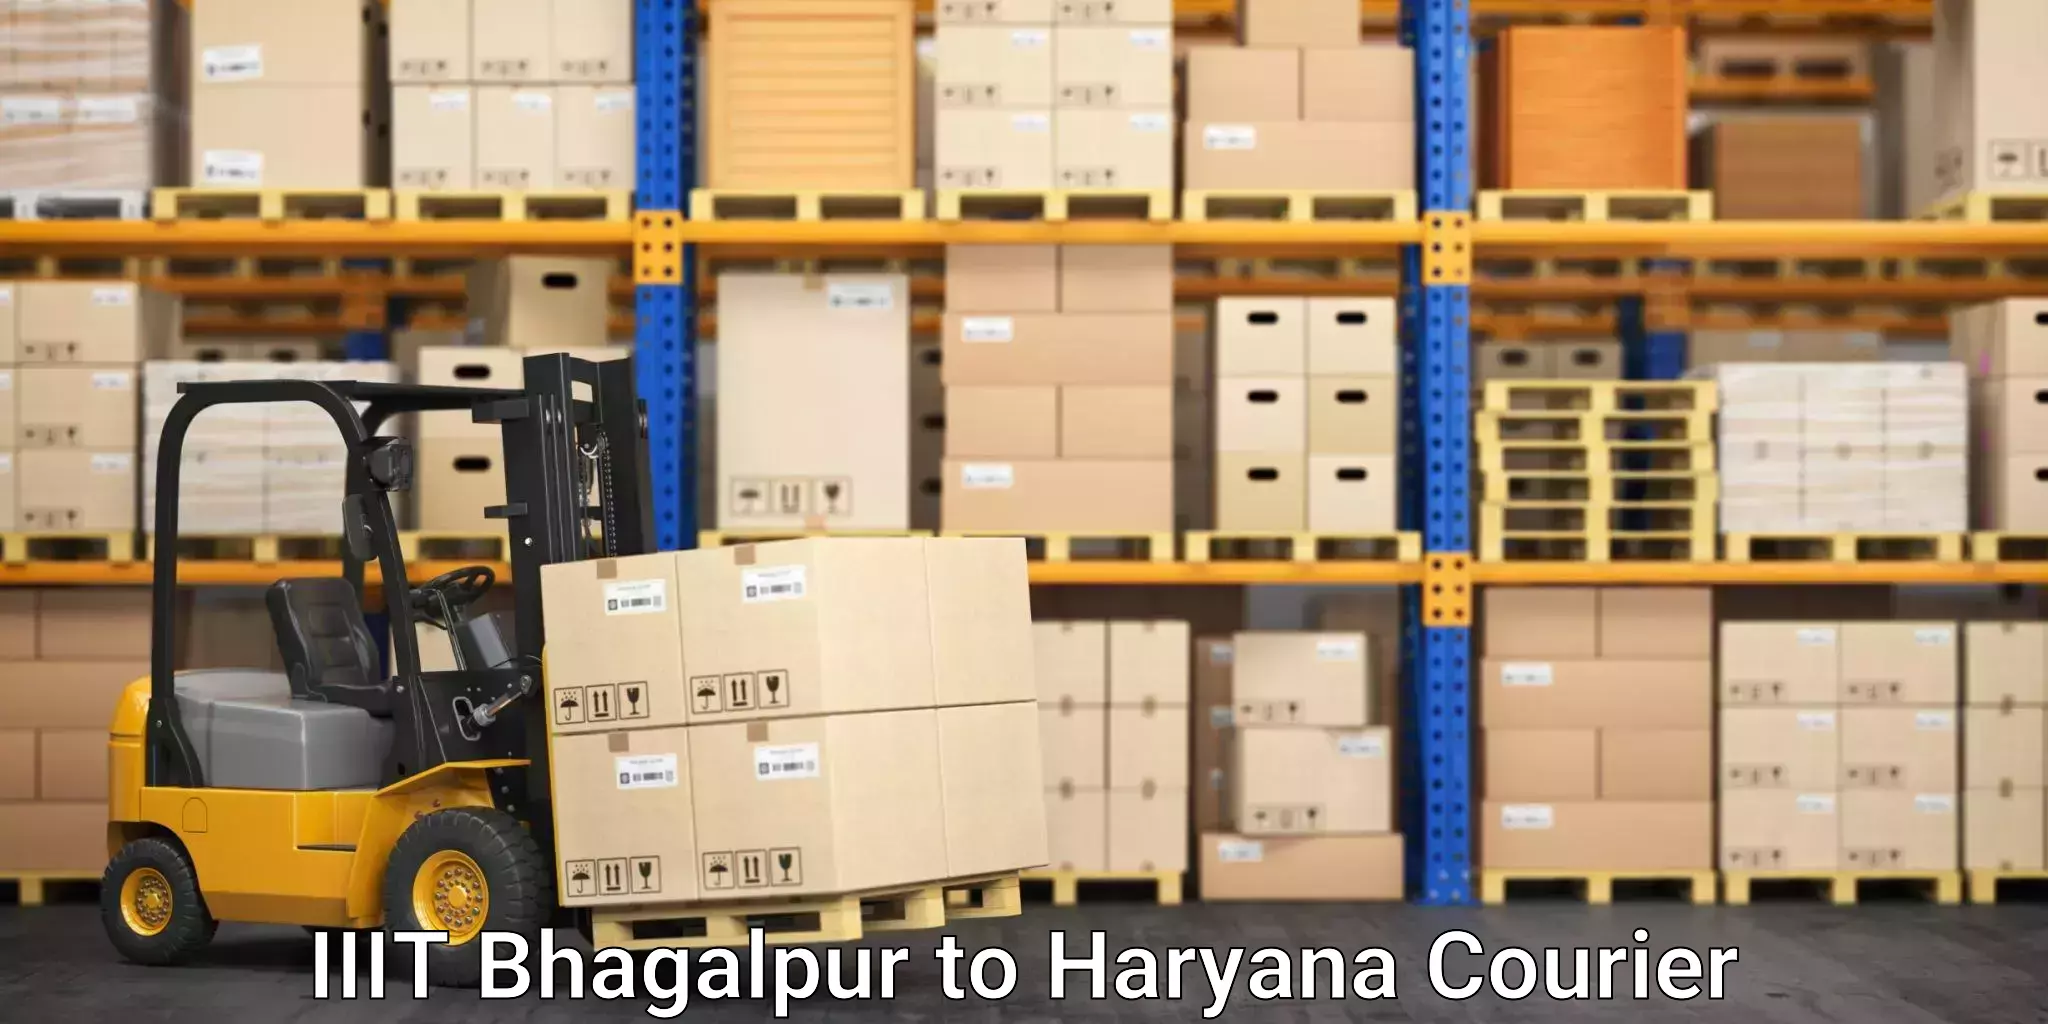 Furniture relocation experts IIIT Bhagalpur to Panipat